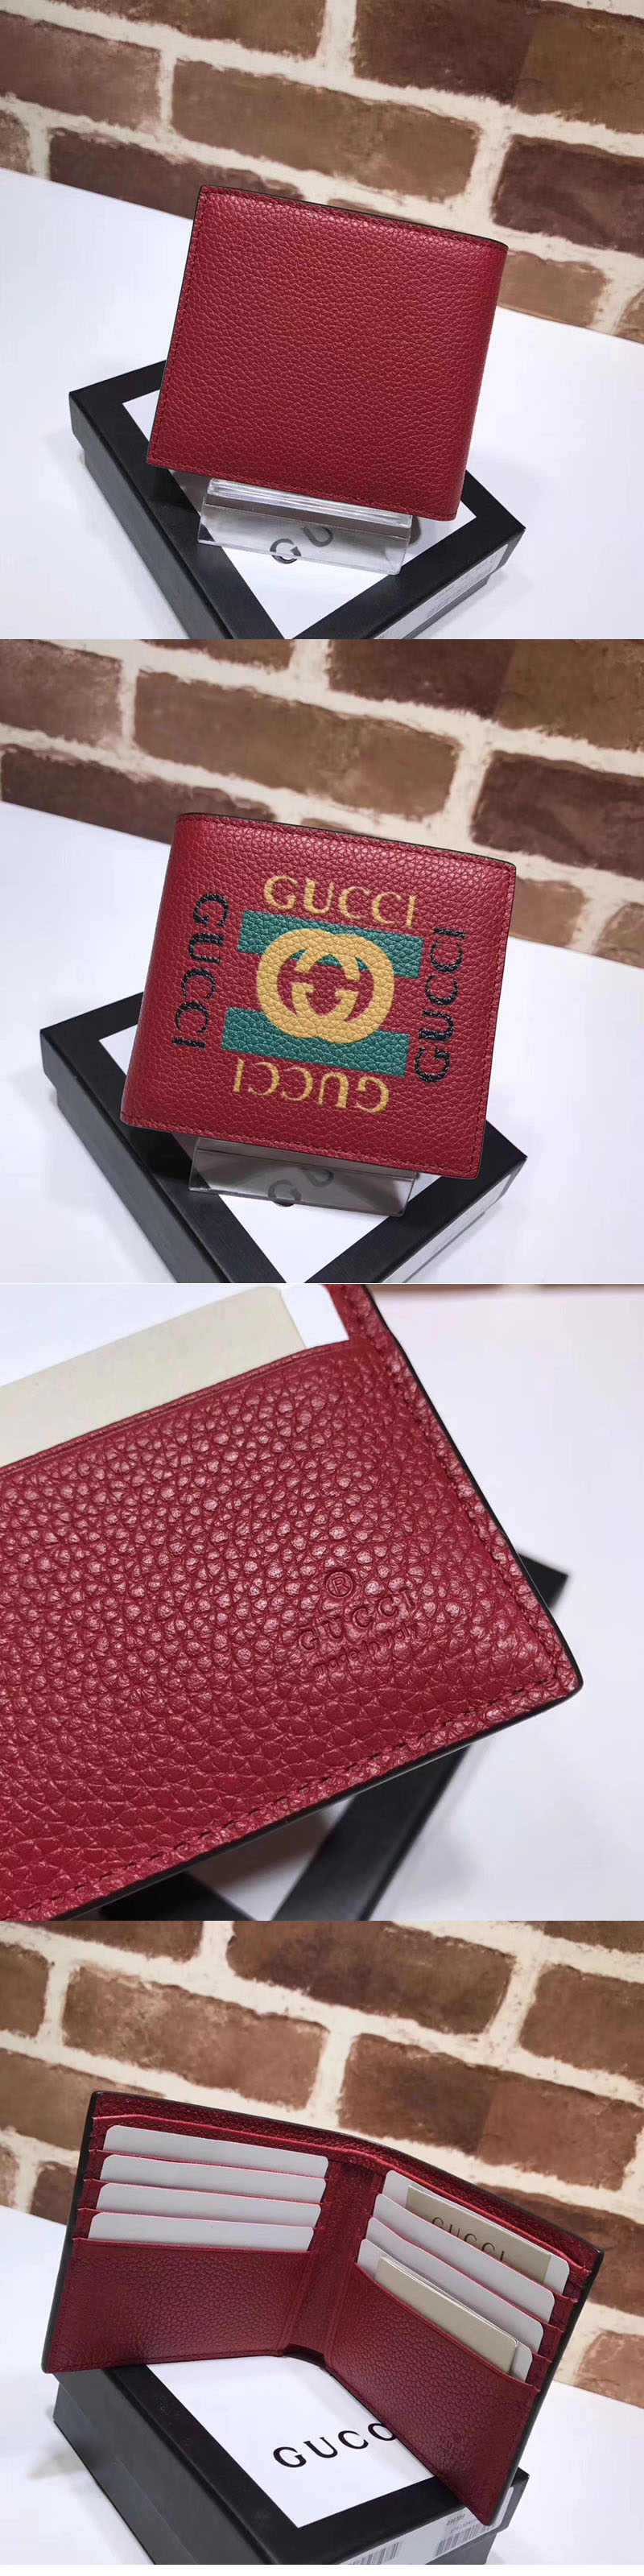 Replica Gucci 496309 Print leather bi-fold wallet Red